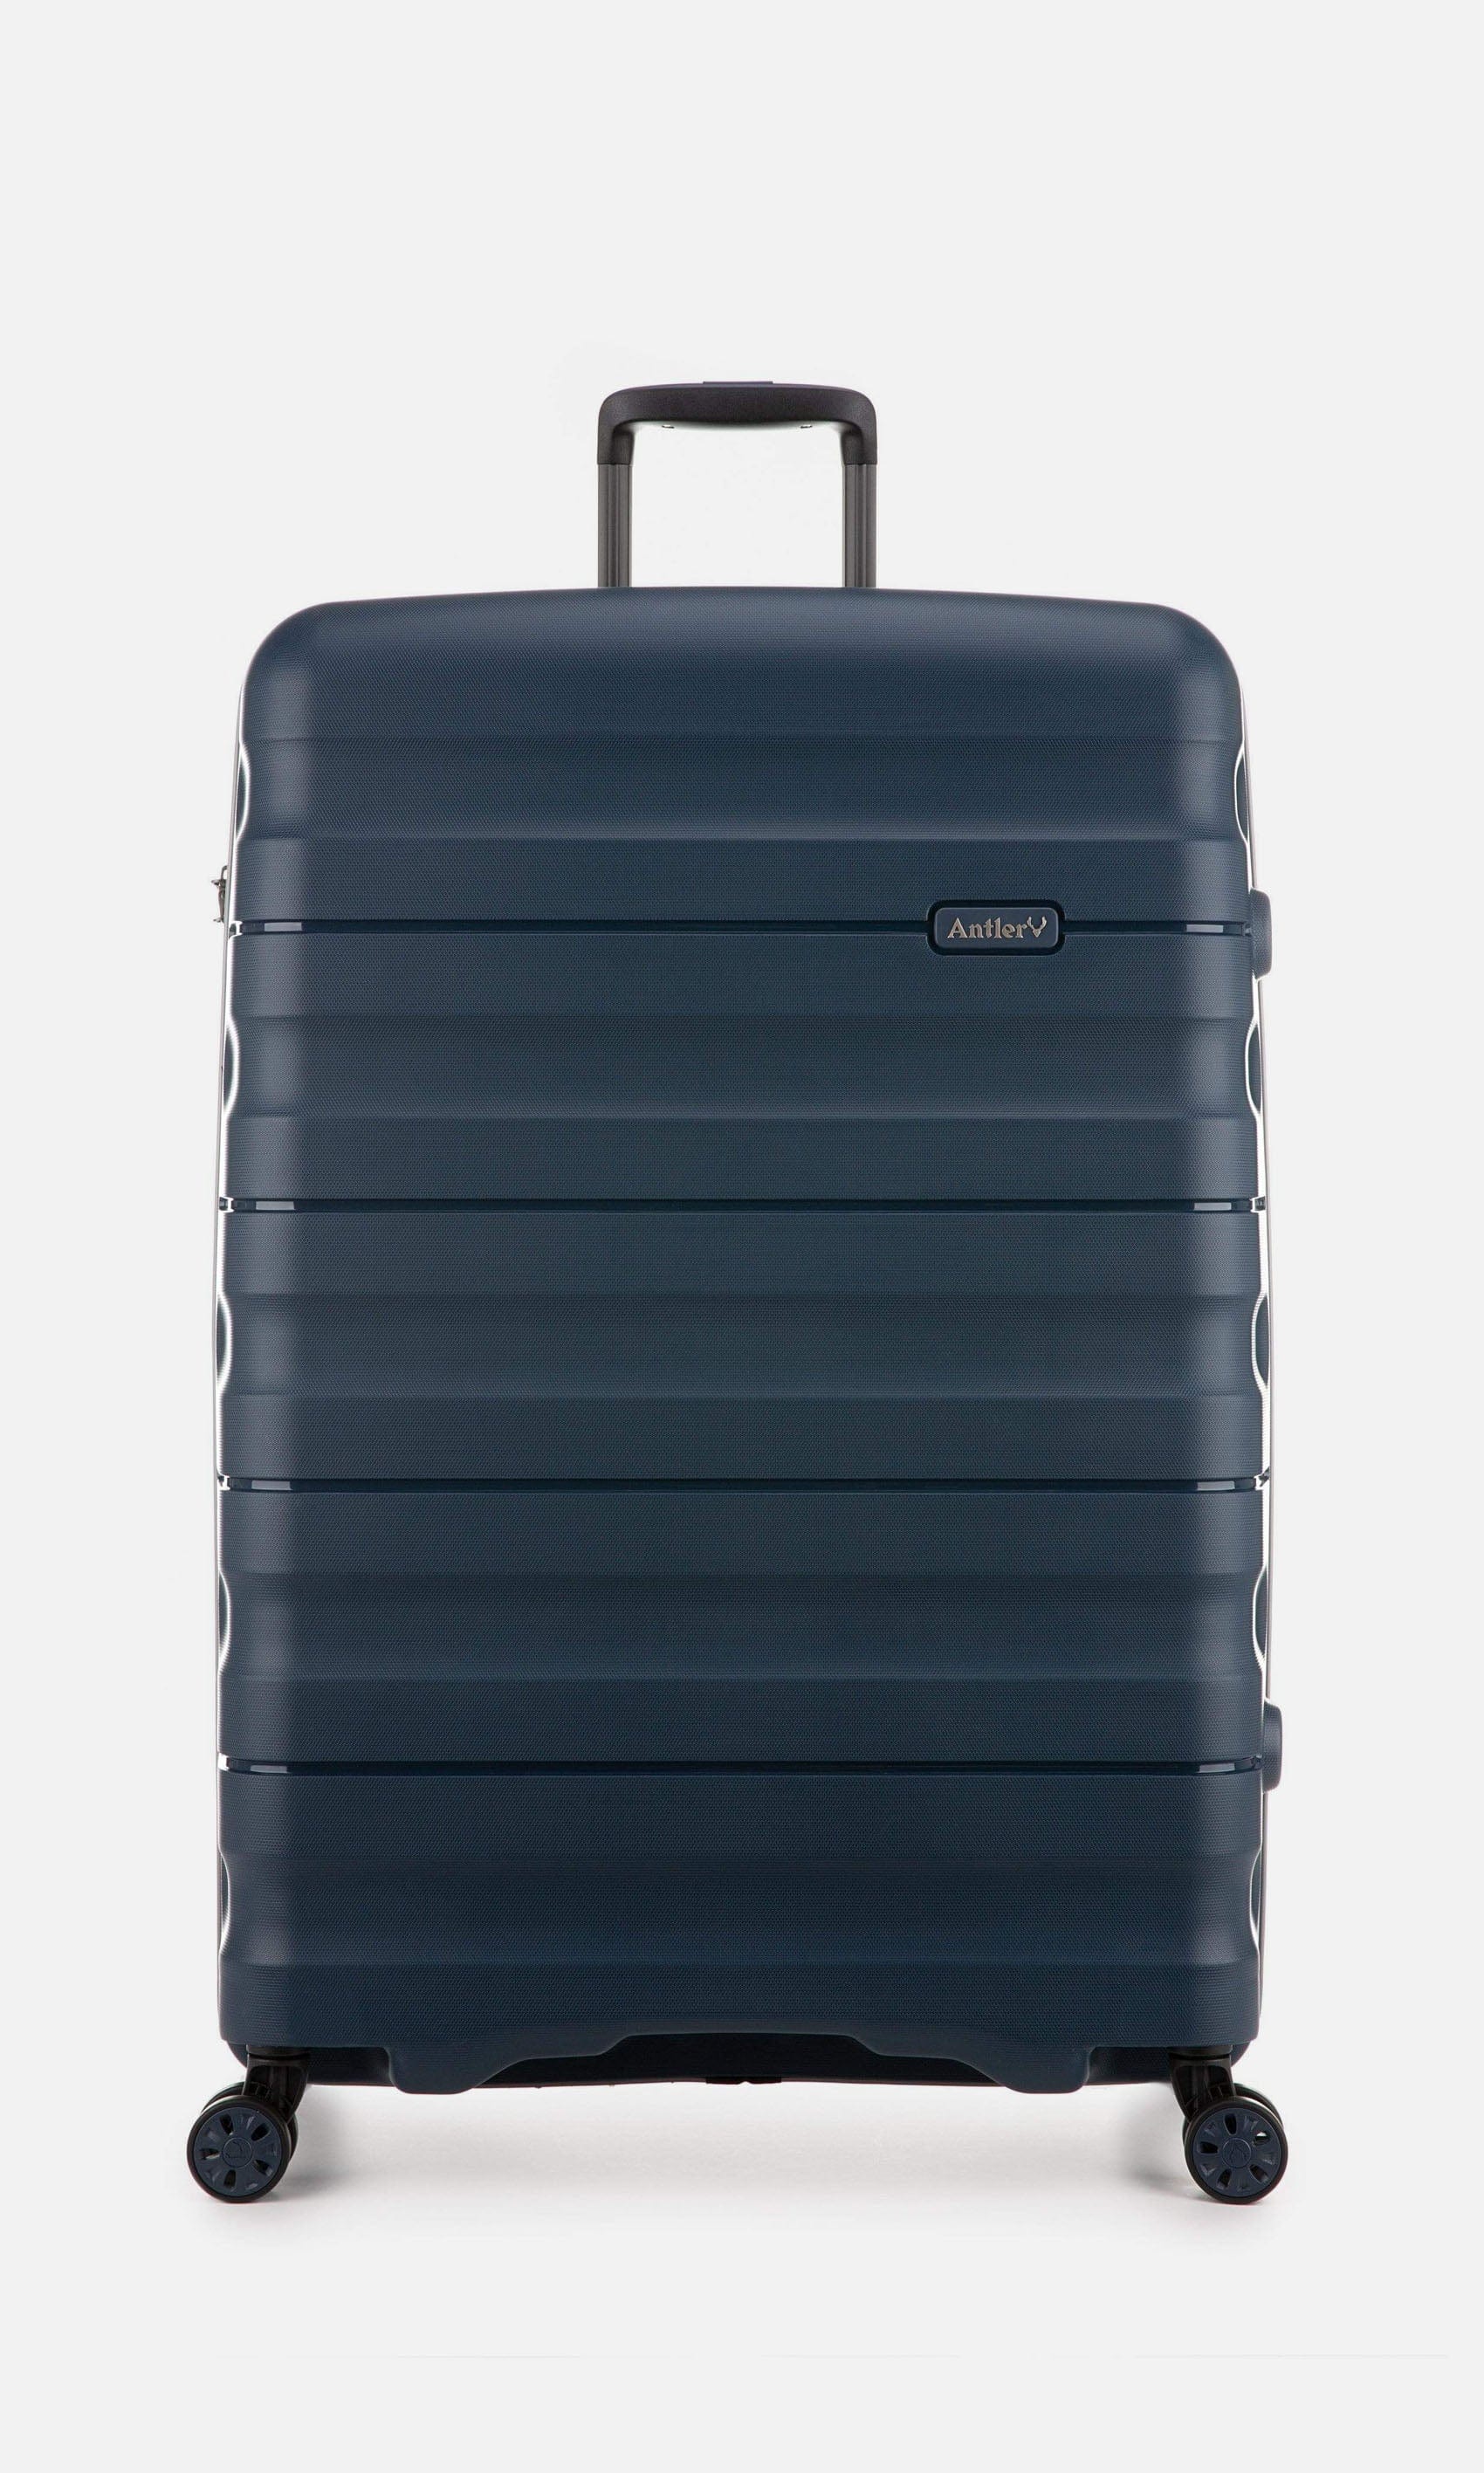 Antler Luggage -  Lincoln large in navy - Hard Suitcase Lincoln Large Suitcase Navy | Hard Suitcase | Antler UK